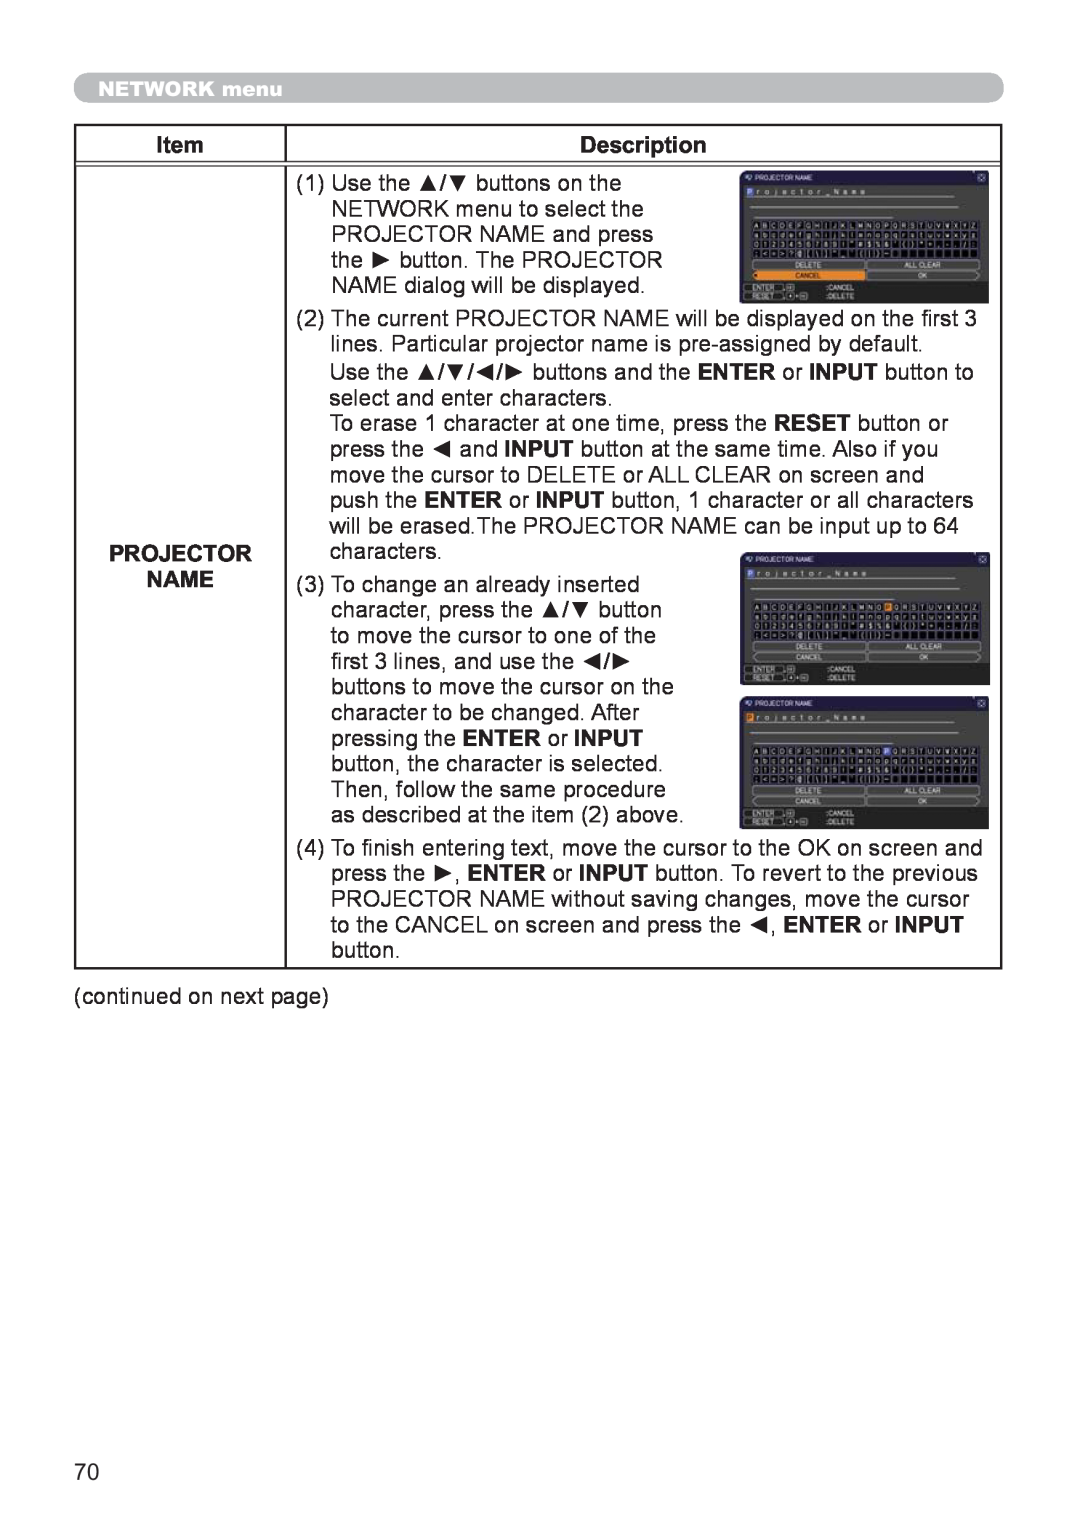 Hitachi CP-X2521WN, CP-X3021WN user manual Item, Description, Projector Name 